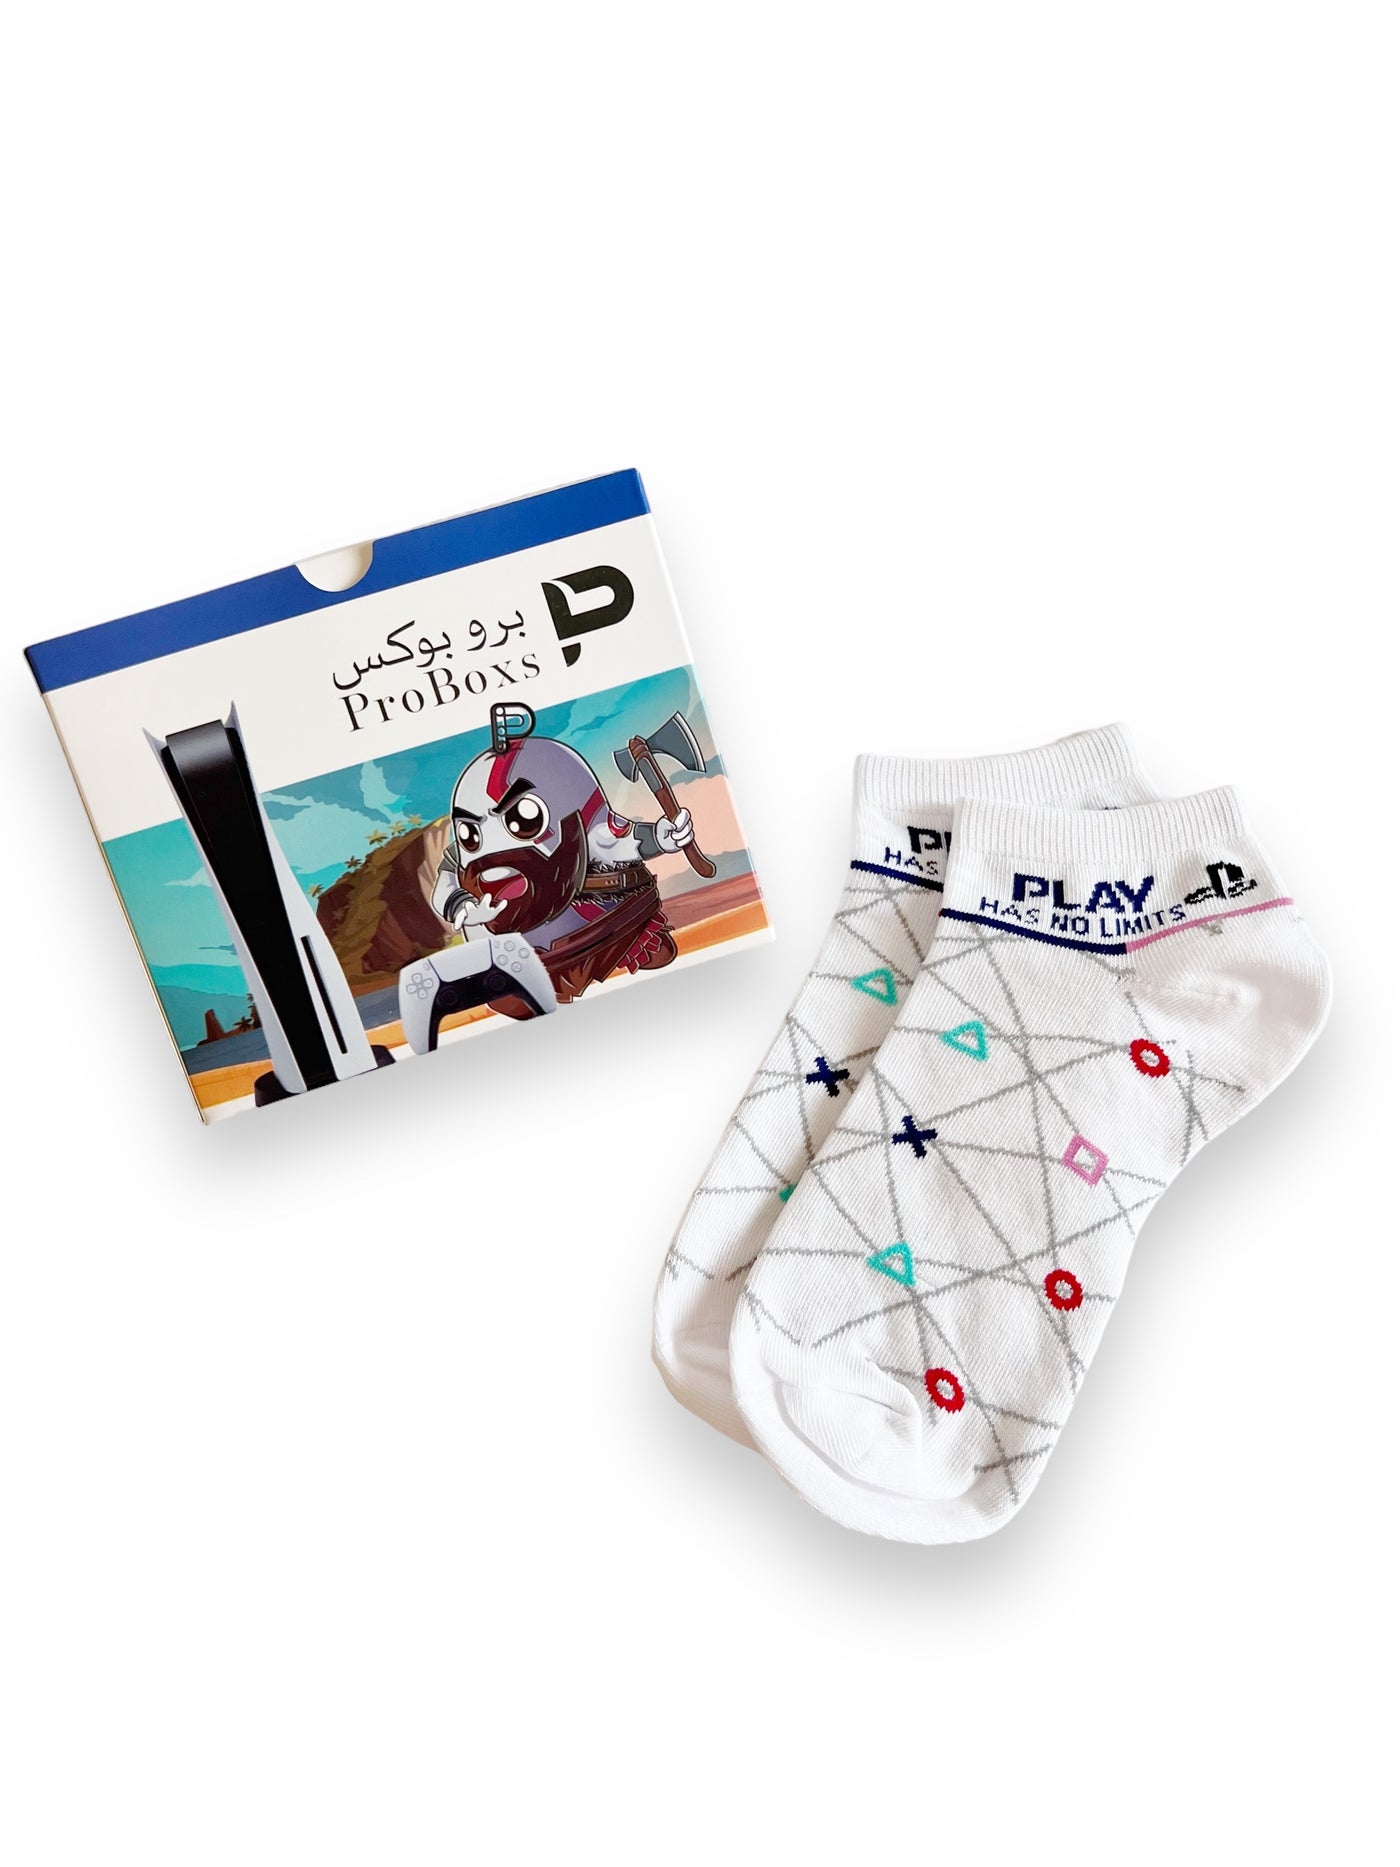 playstation socks - PROBOXS